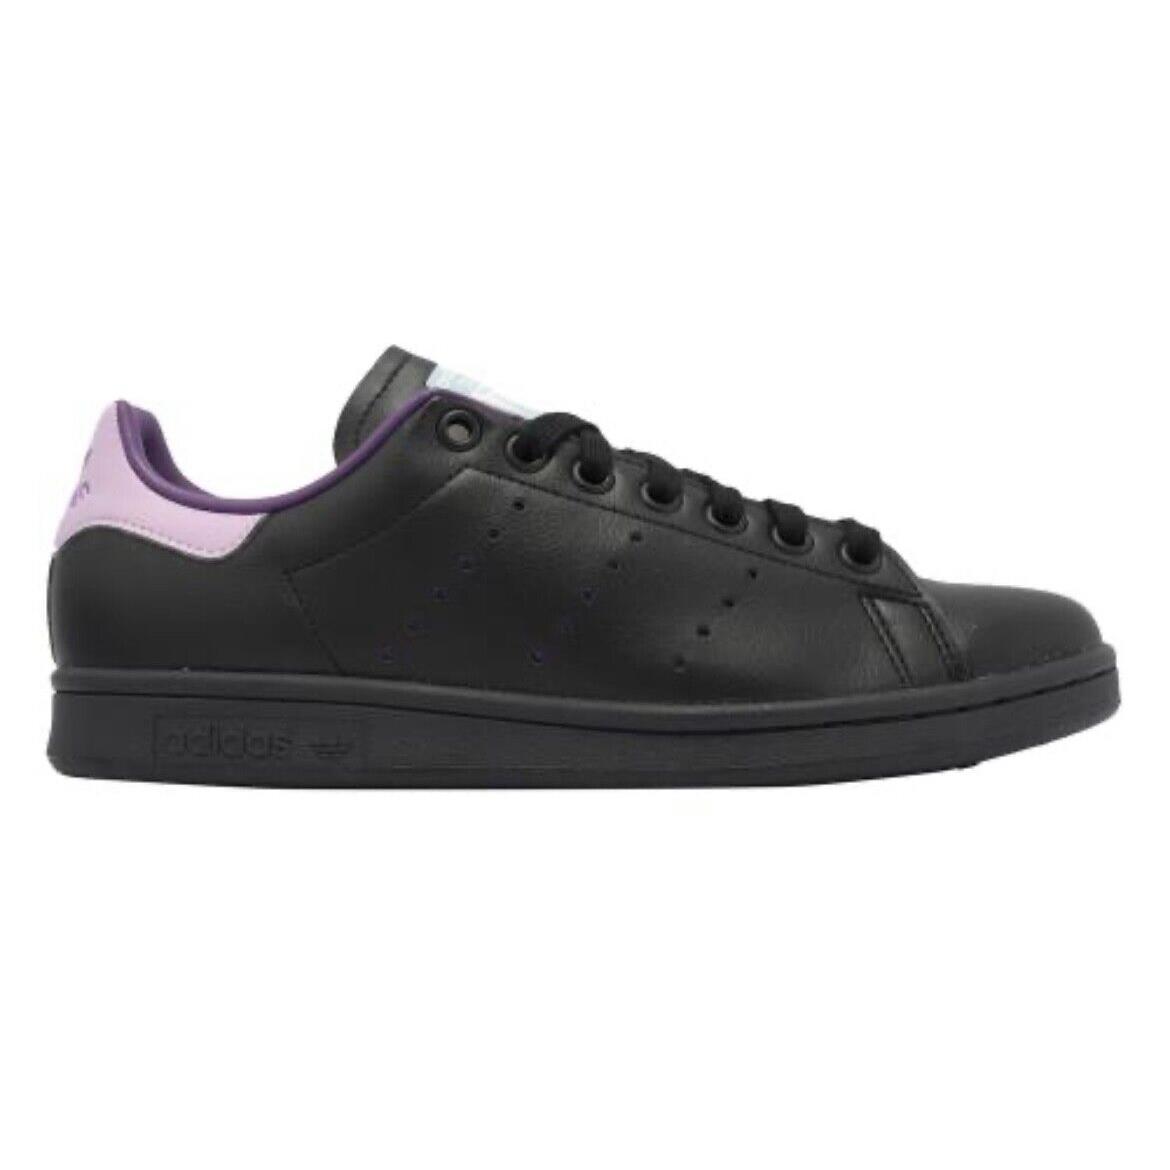 Adidas Stan Smith Ursula Men Casual Retro Shoe Black Purple Lifestyle Sneaker